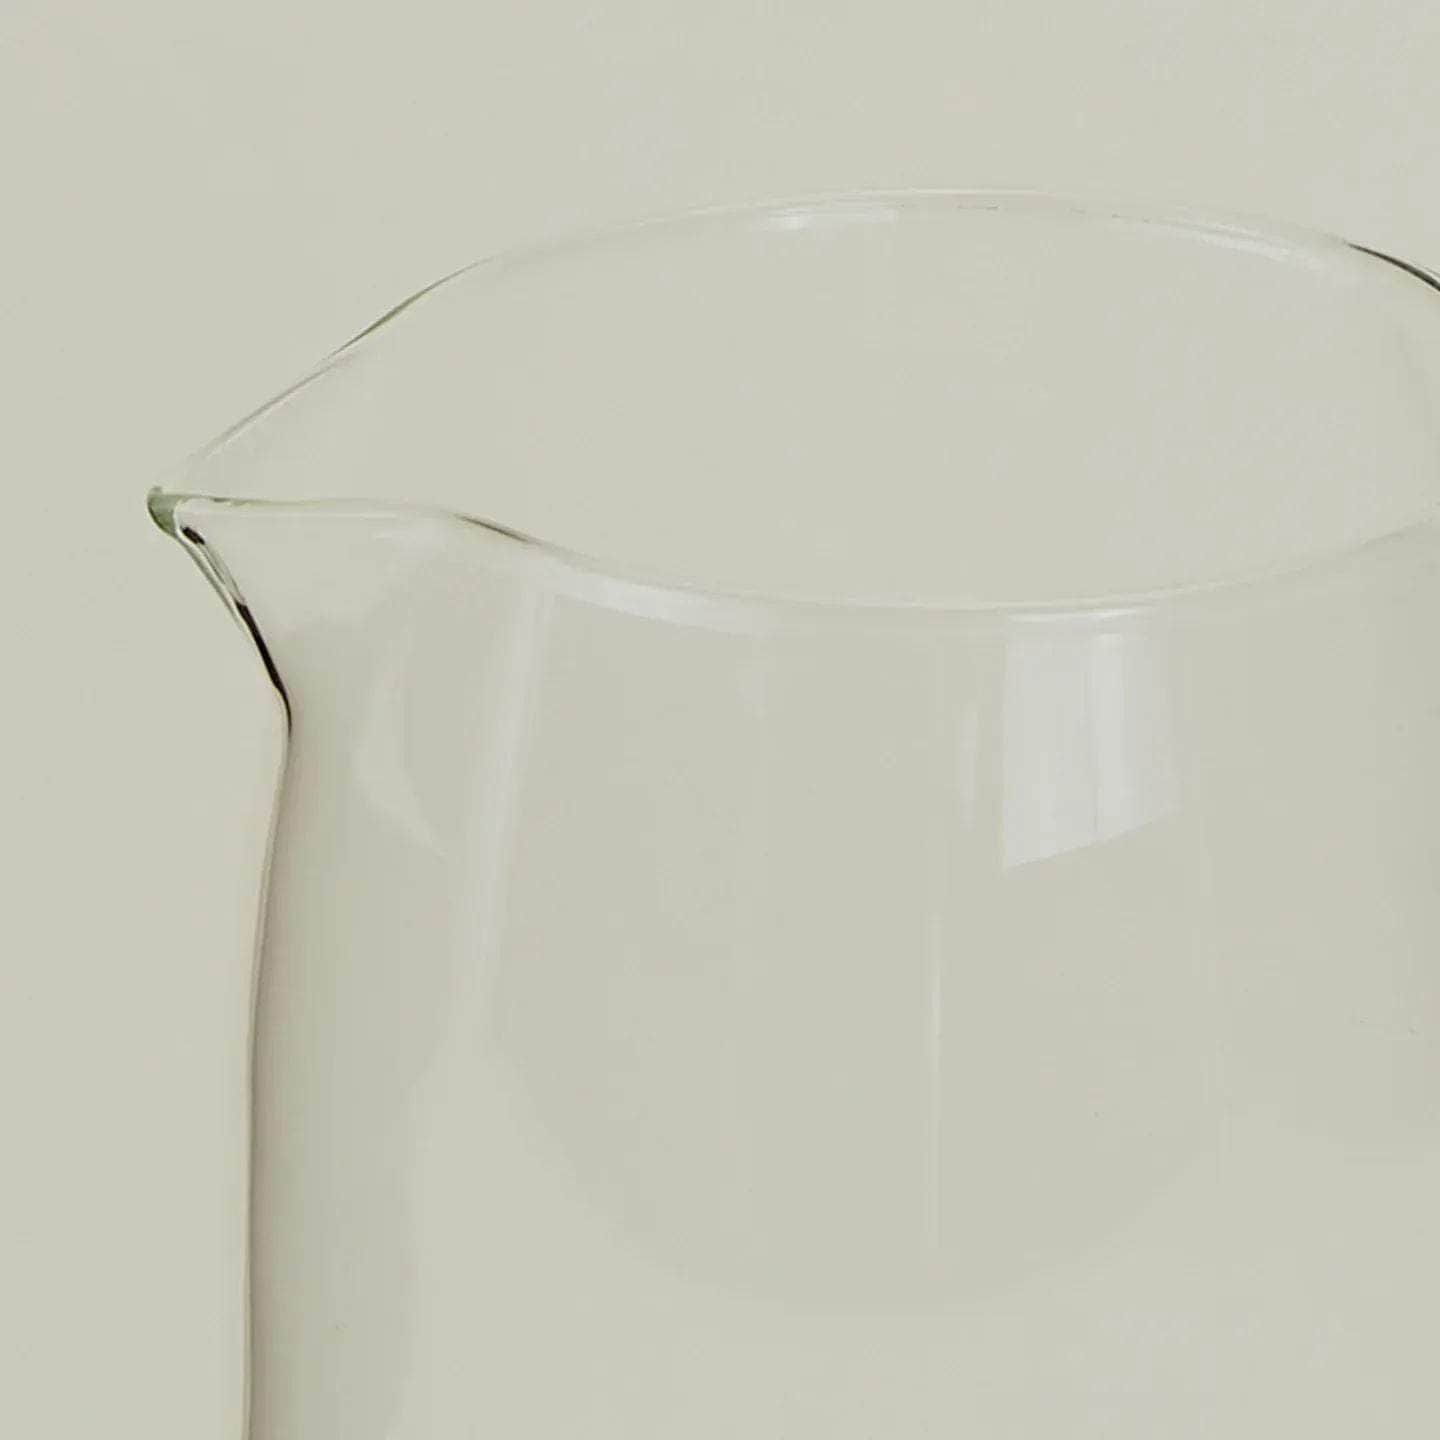 Essential Glassware - Pitchers